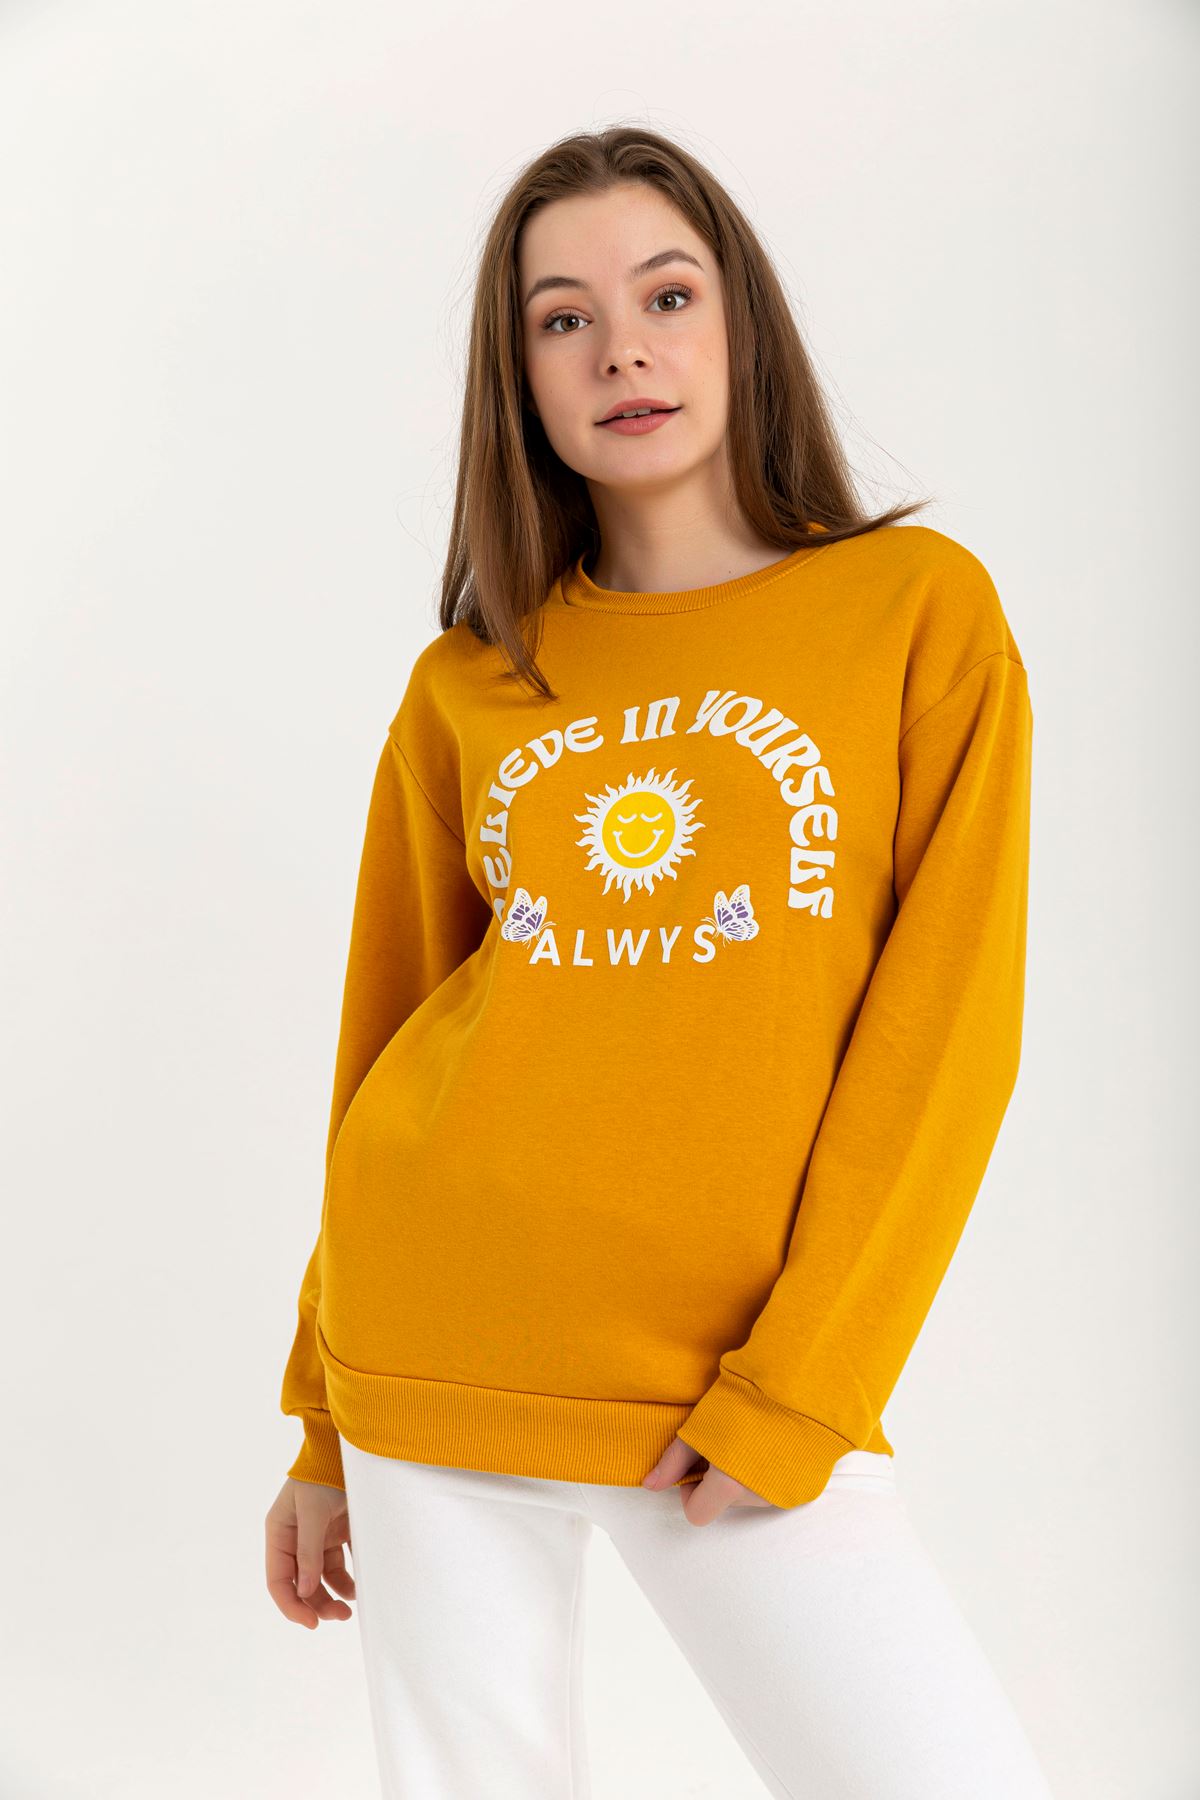 Third Knit With Wool İnside Fabric Long Sleeve Hip Height İnscribed Women Sweatshirt - Mustard